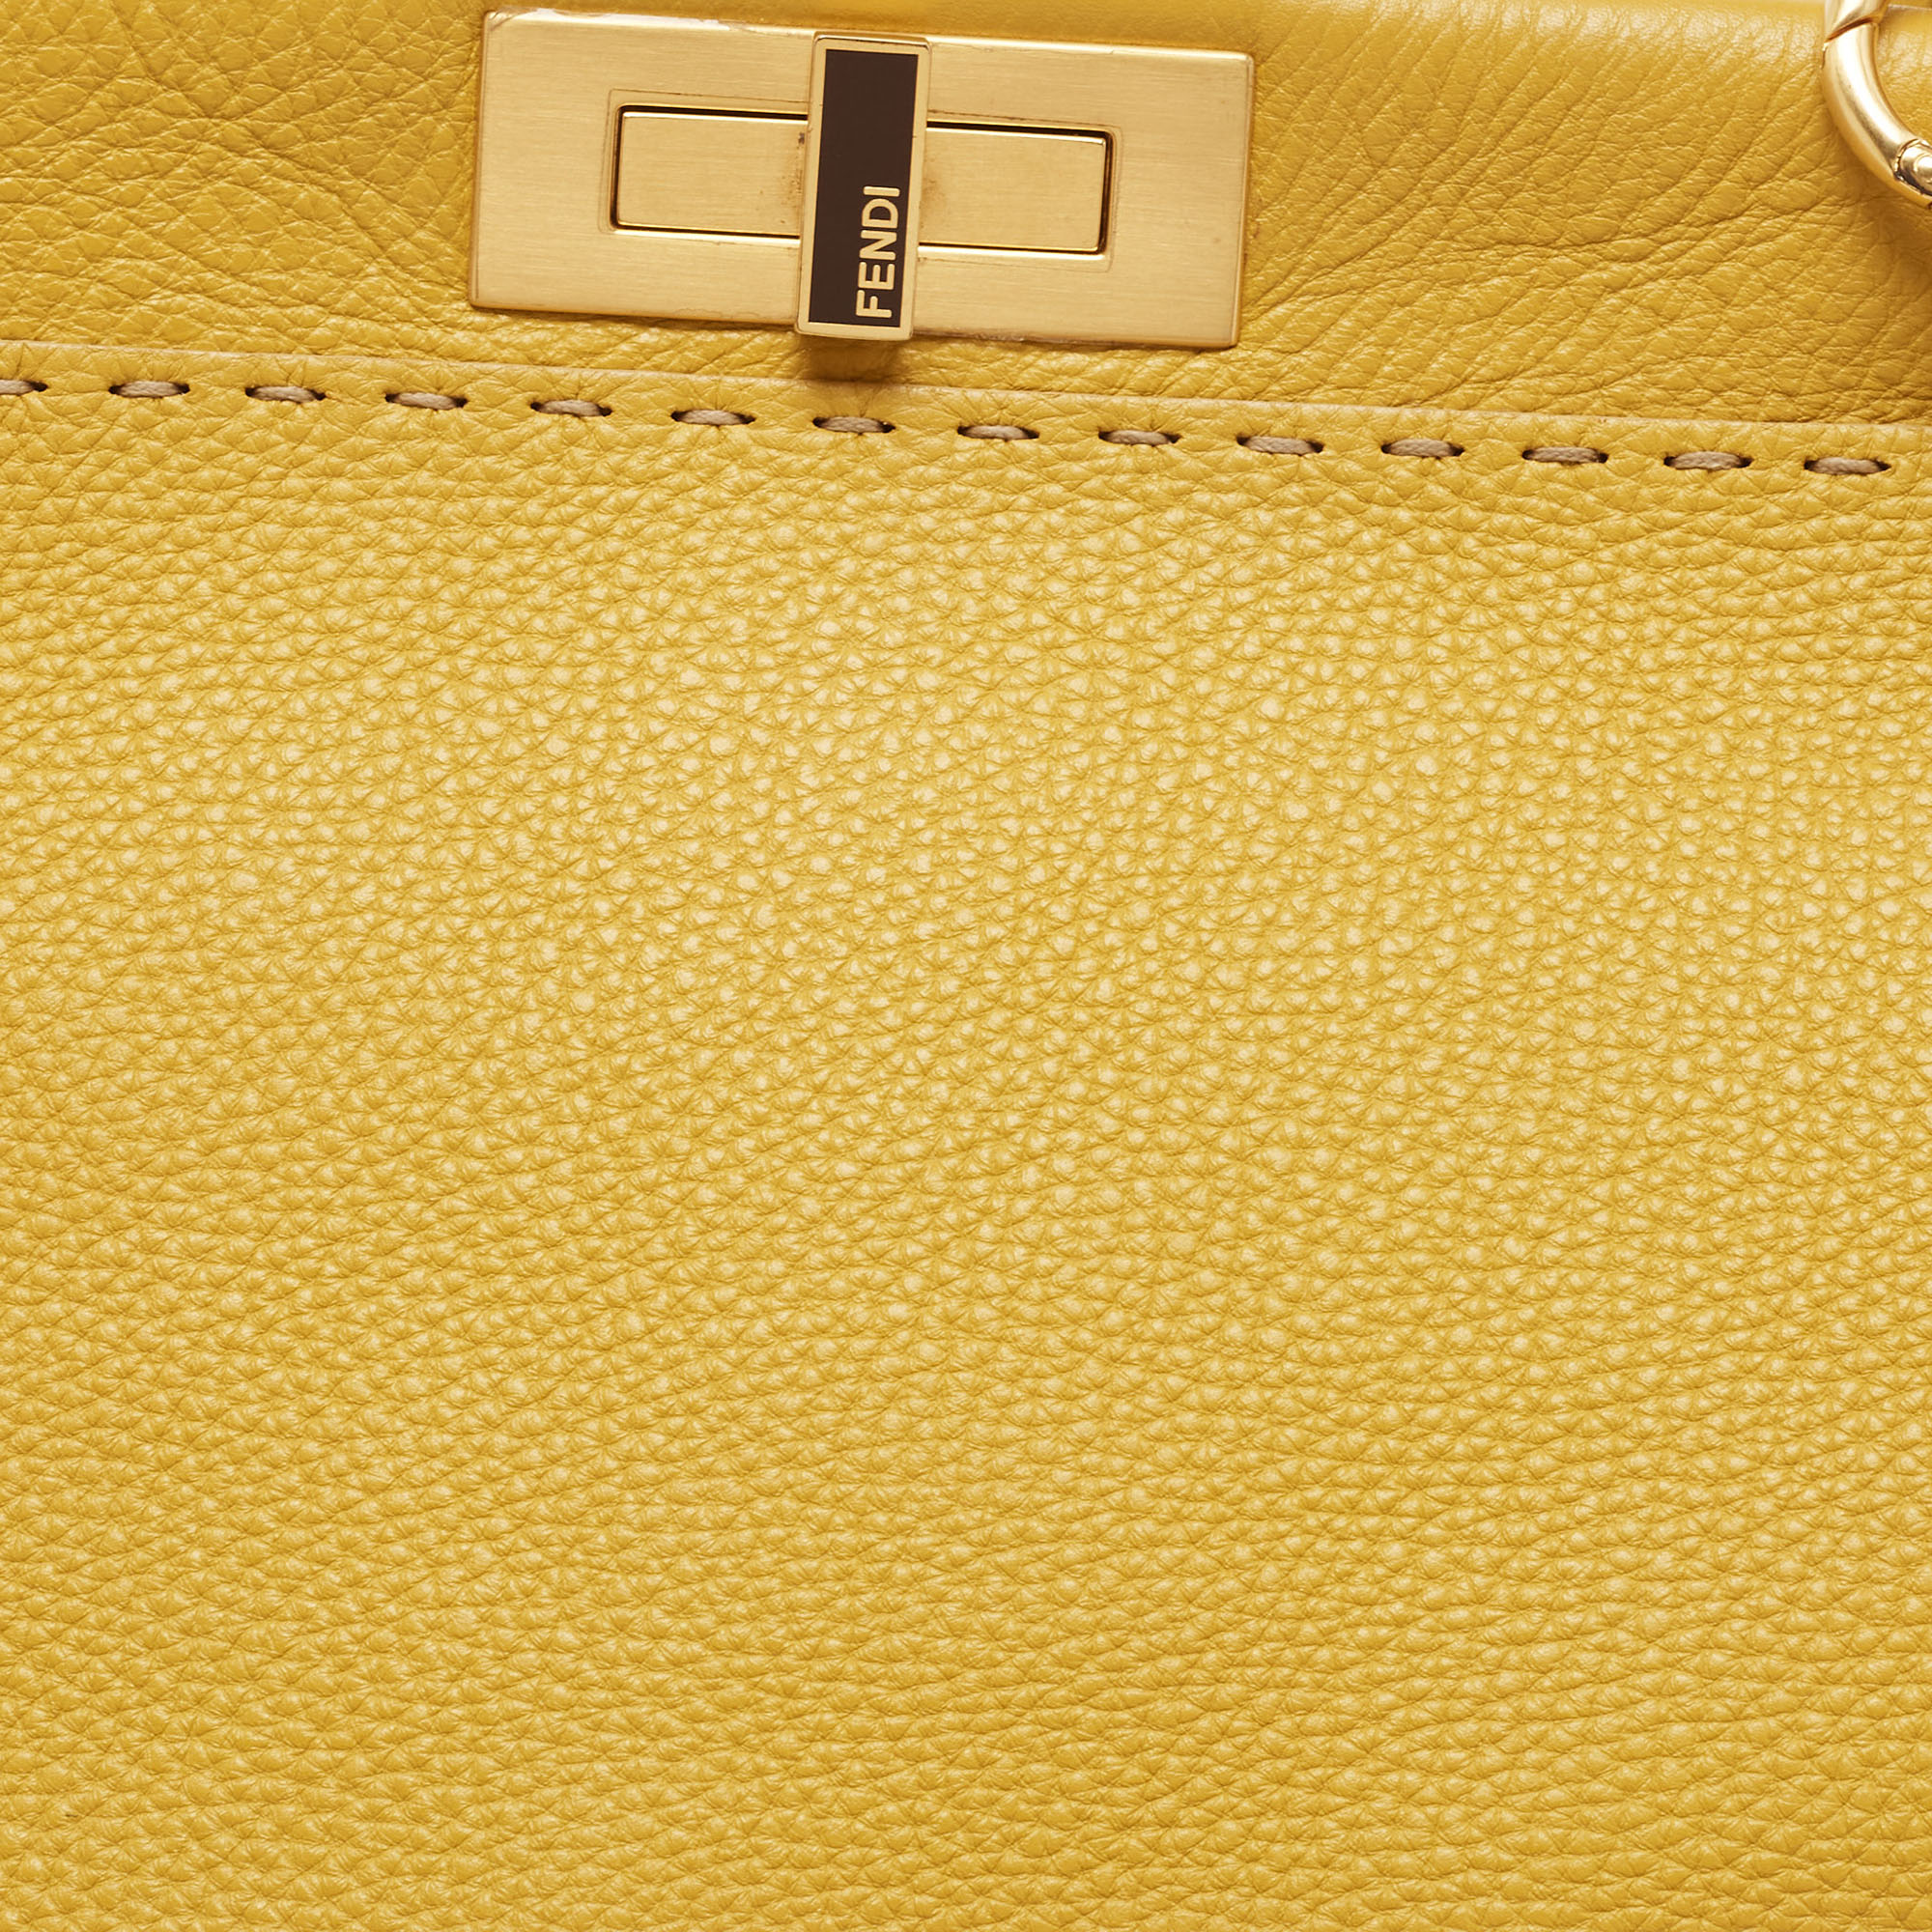 Fendi Yellow Selleria Leather Large Peekaboo Top Handle Bag